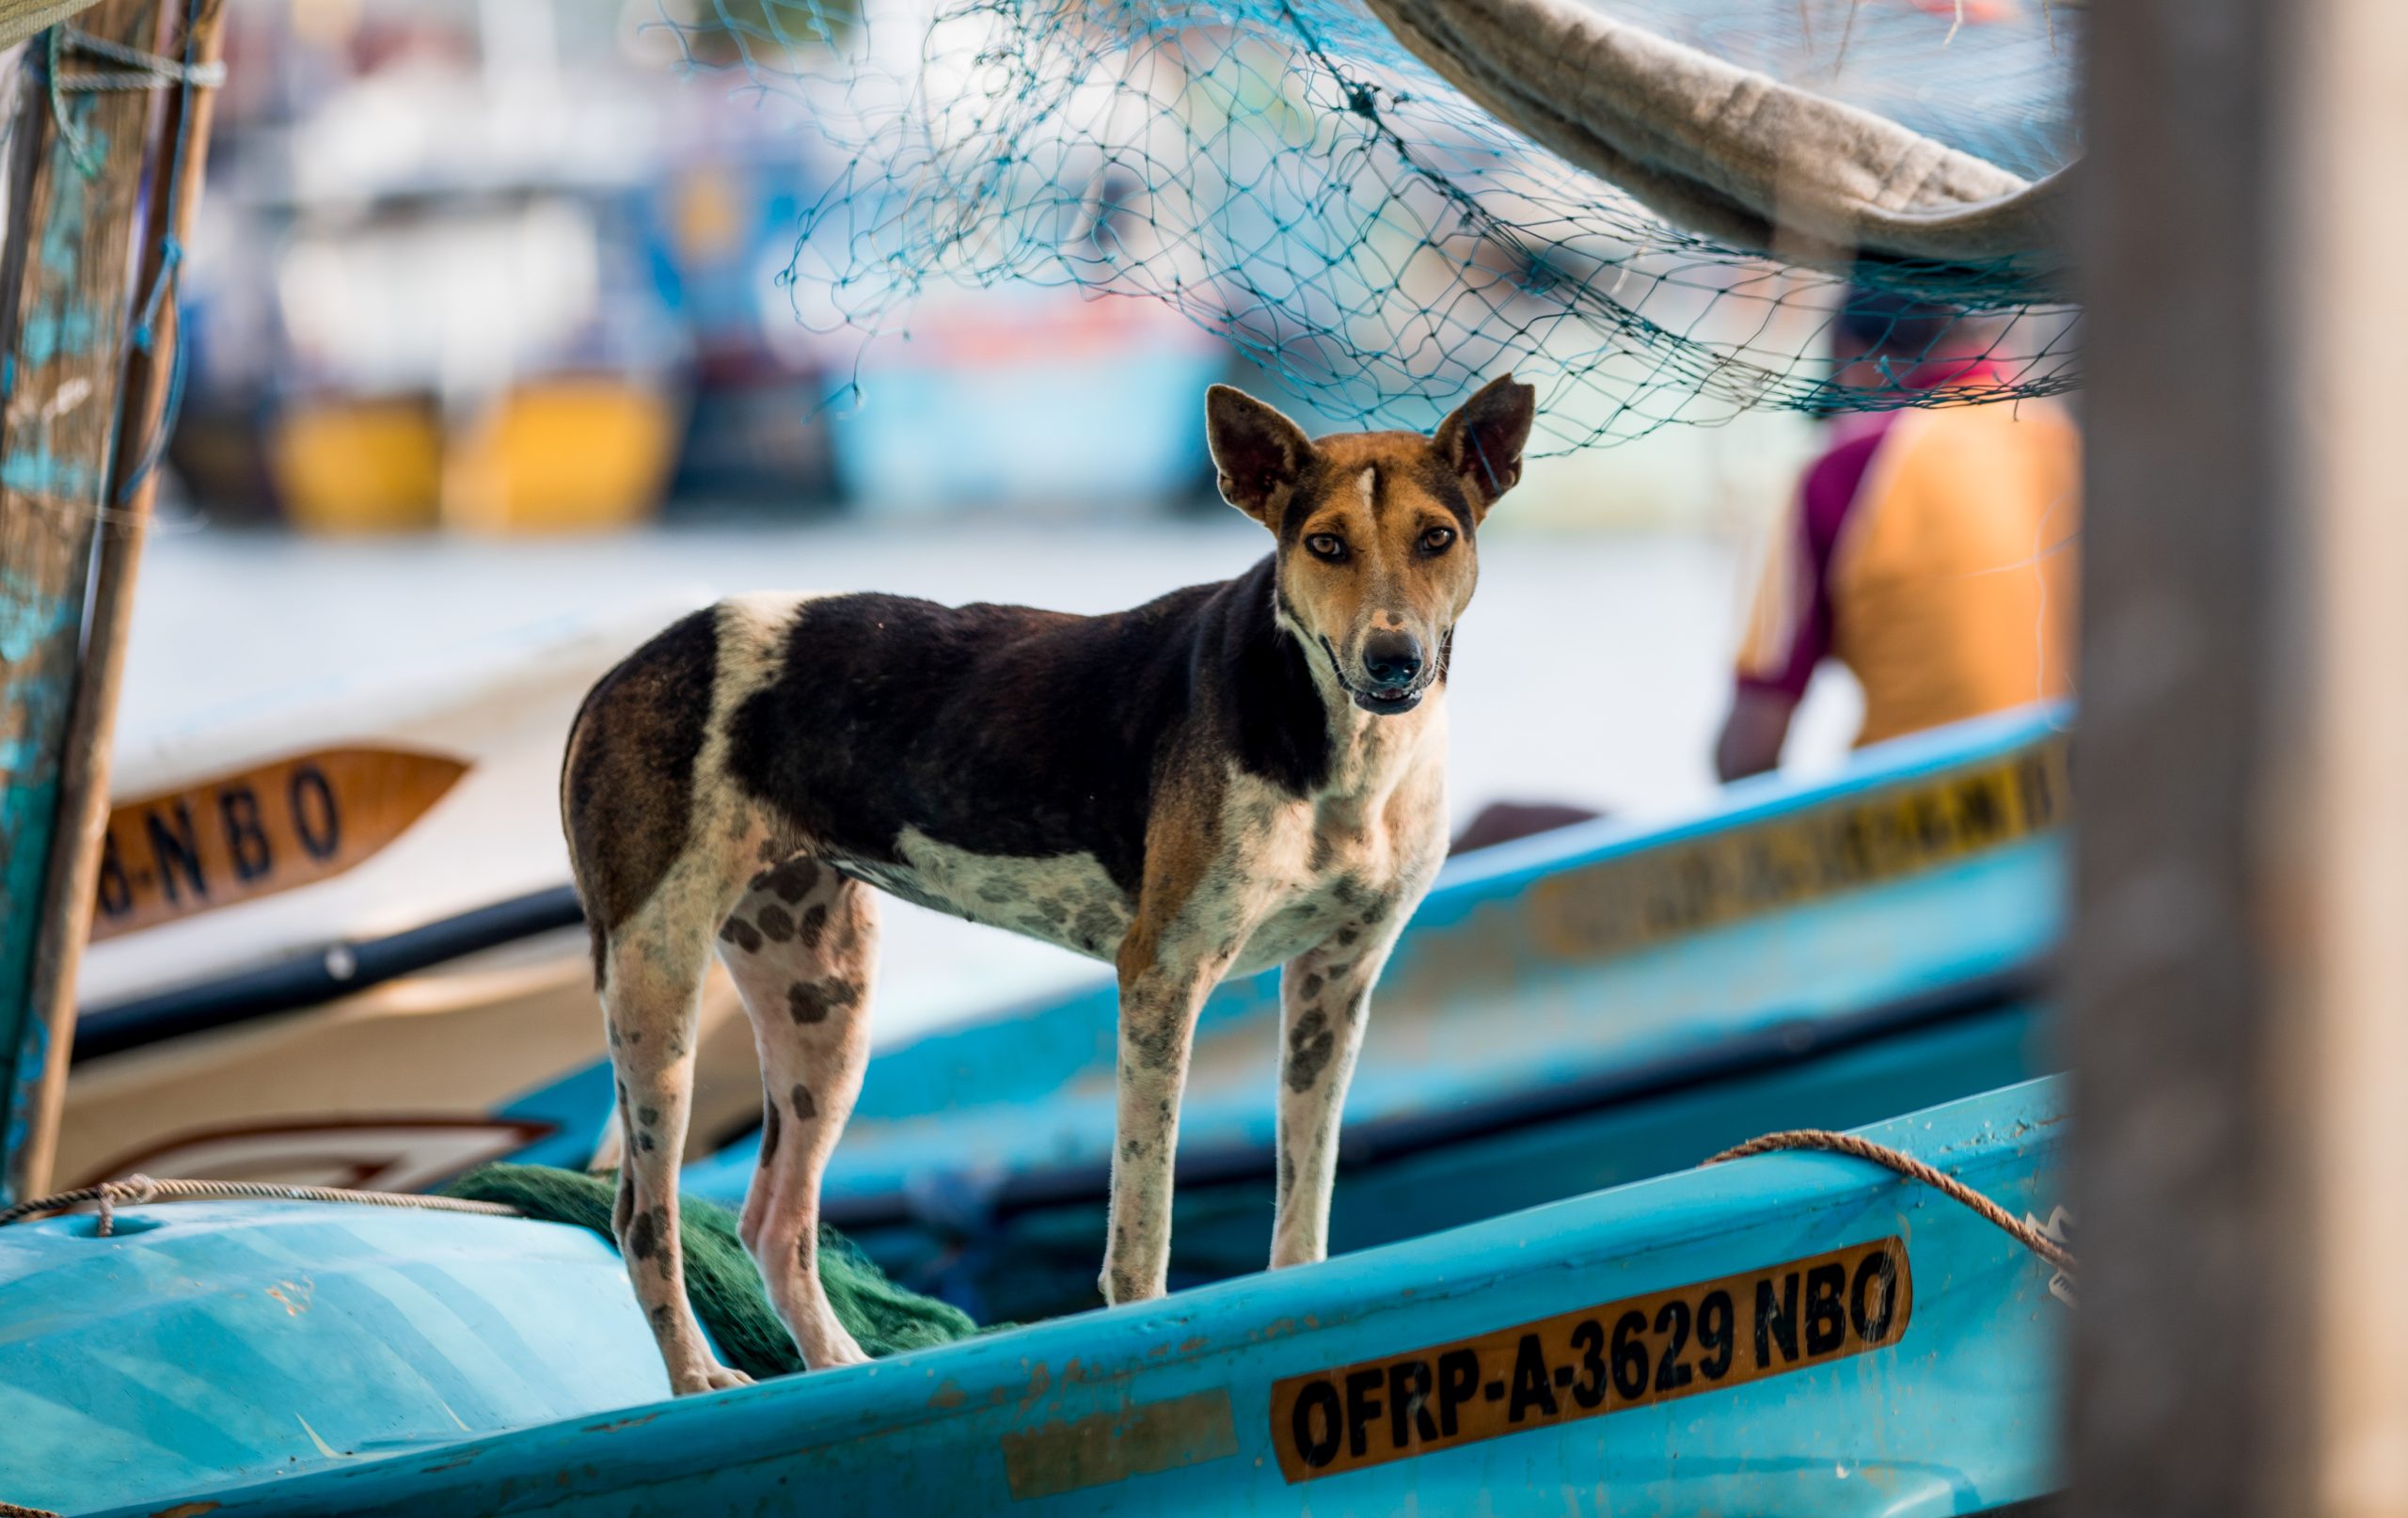 Street dog in Sri Lanka standing on a boat.